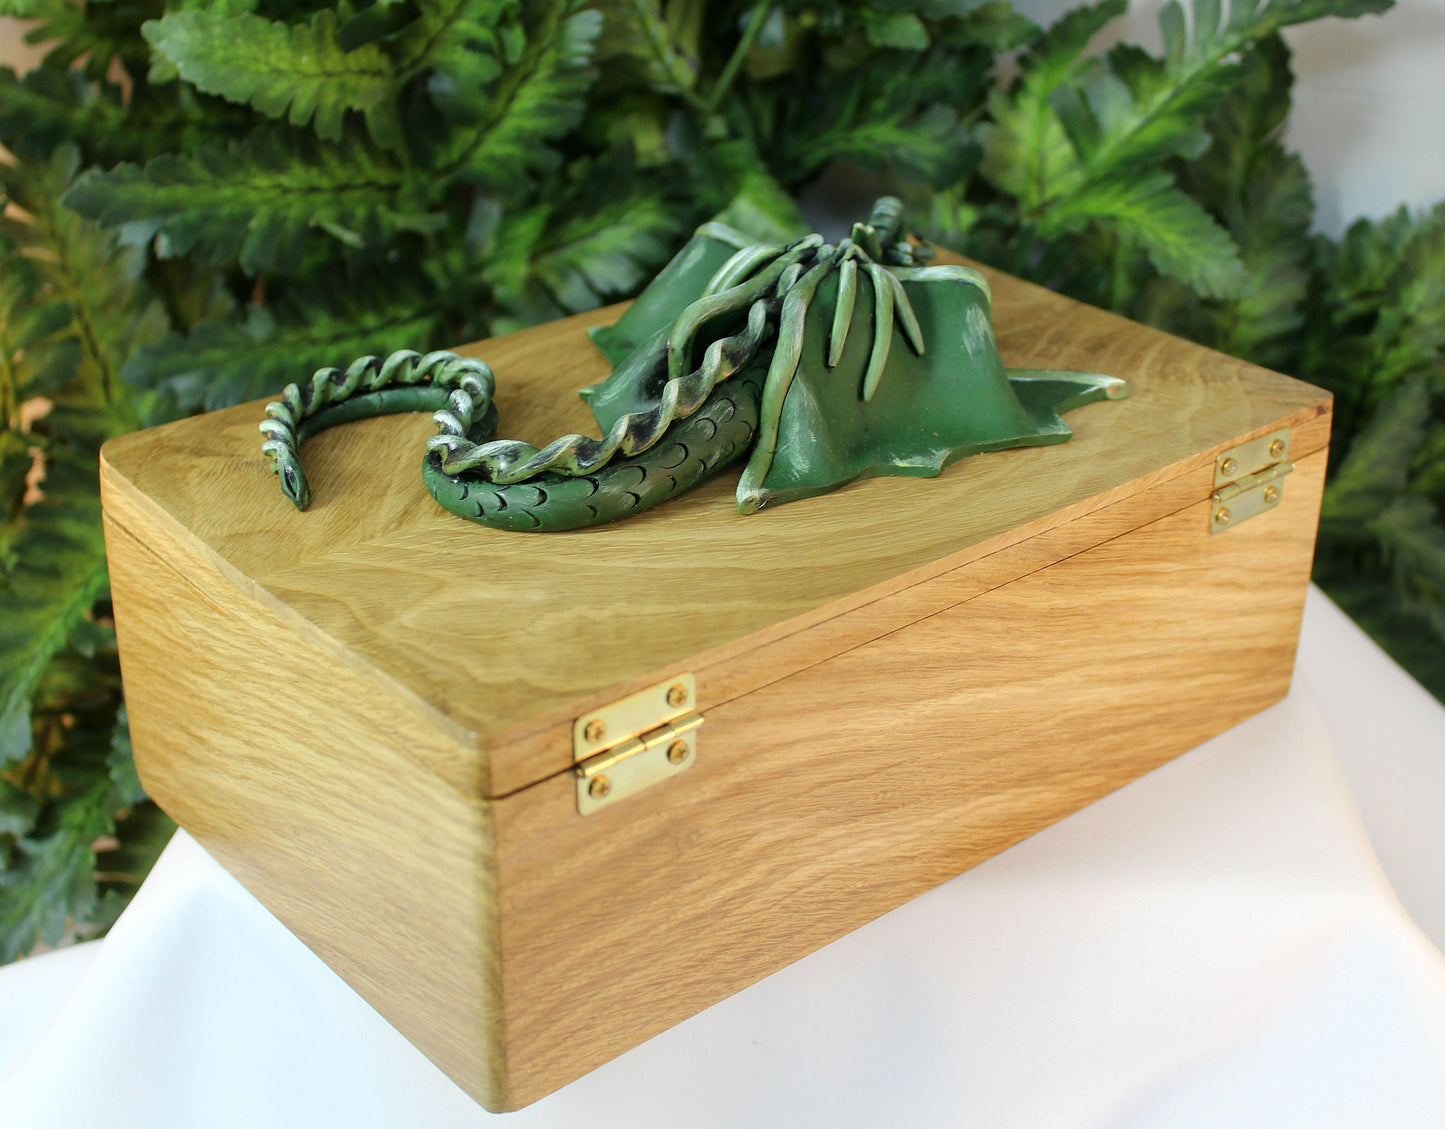 Polymer Clay Green Dragon on Natural Wood Box - 1-088